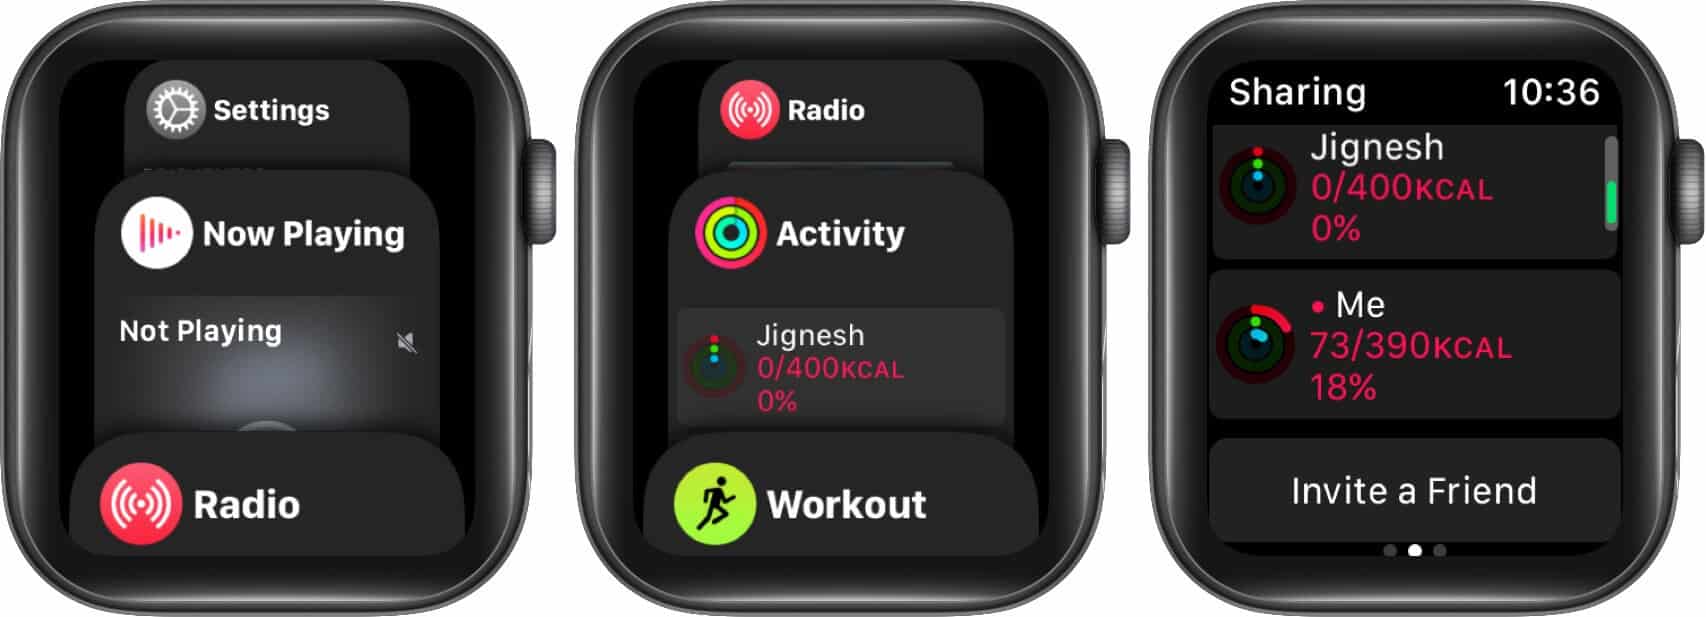 switch between apps in app switcher on apple watch